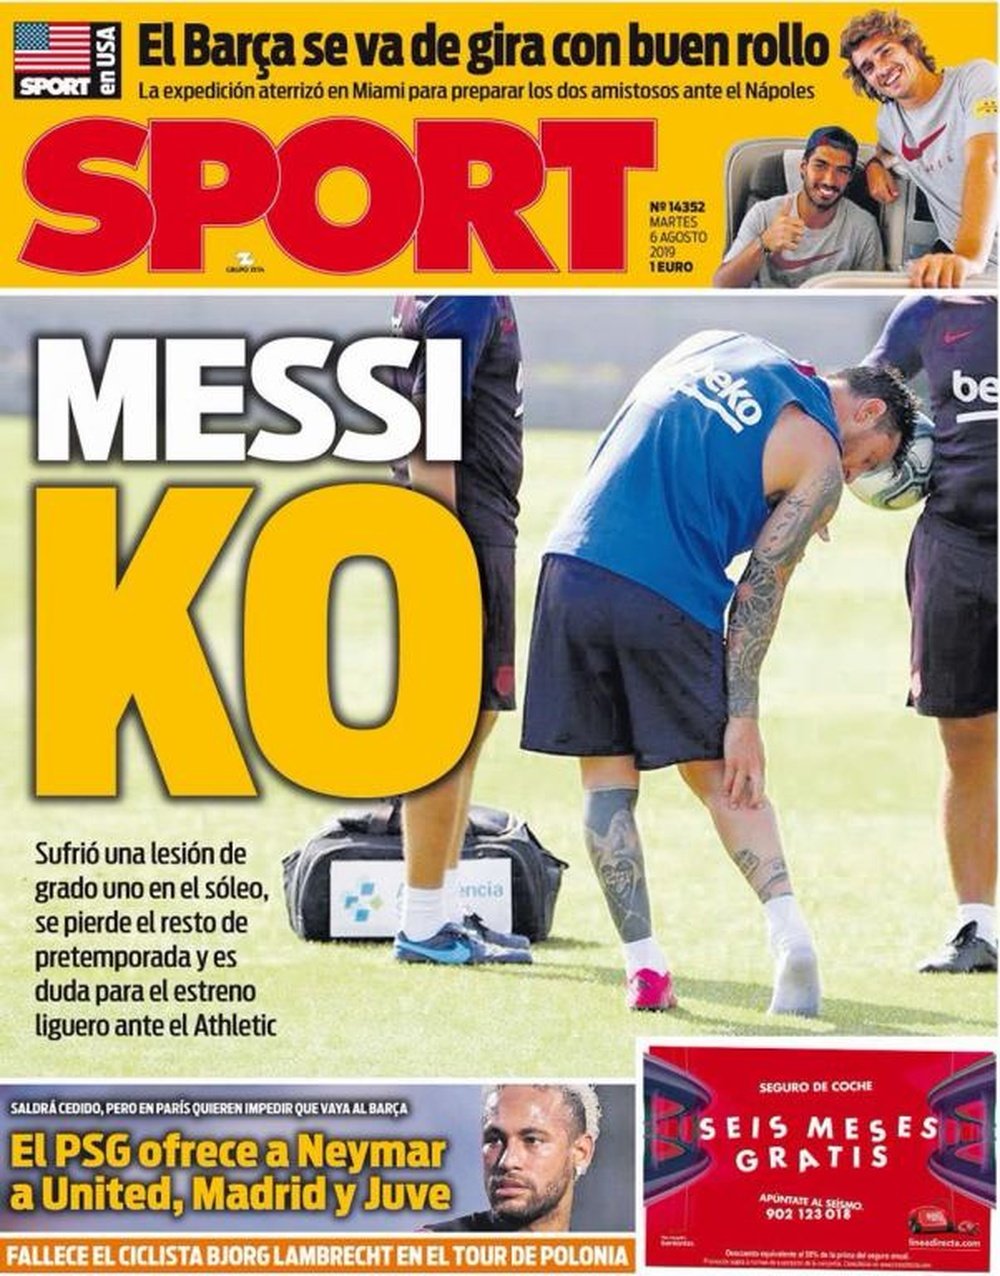 Capa do jornal Sport de 06-08-19. Sport